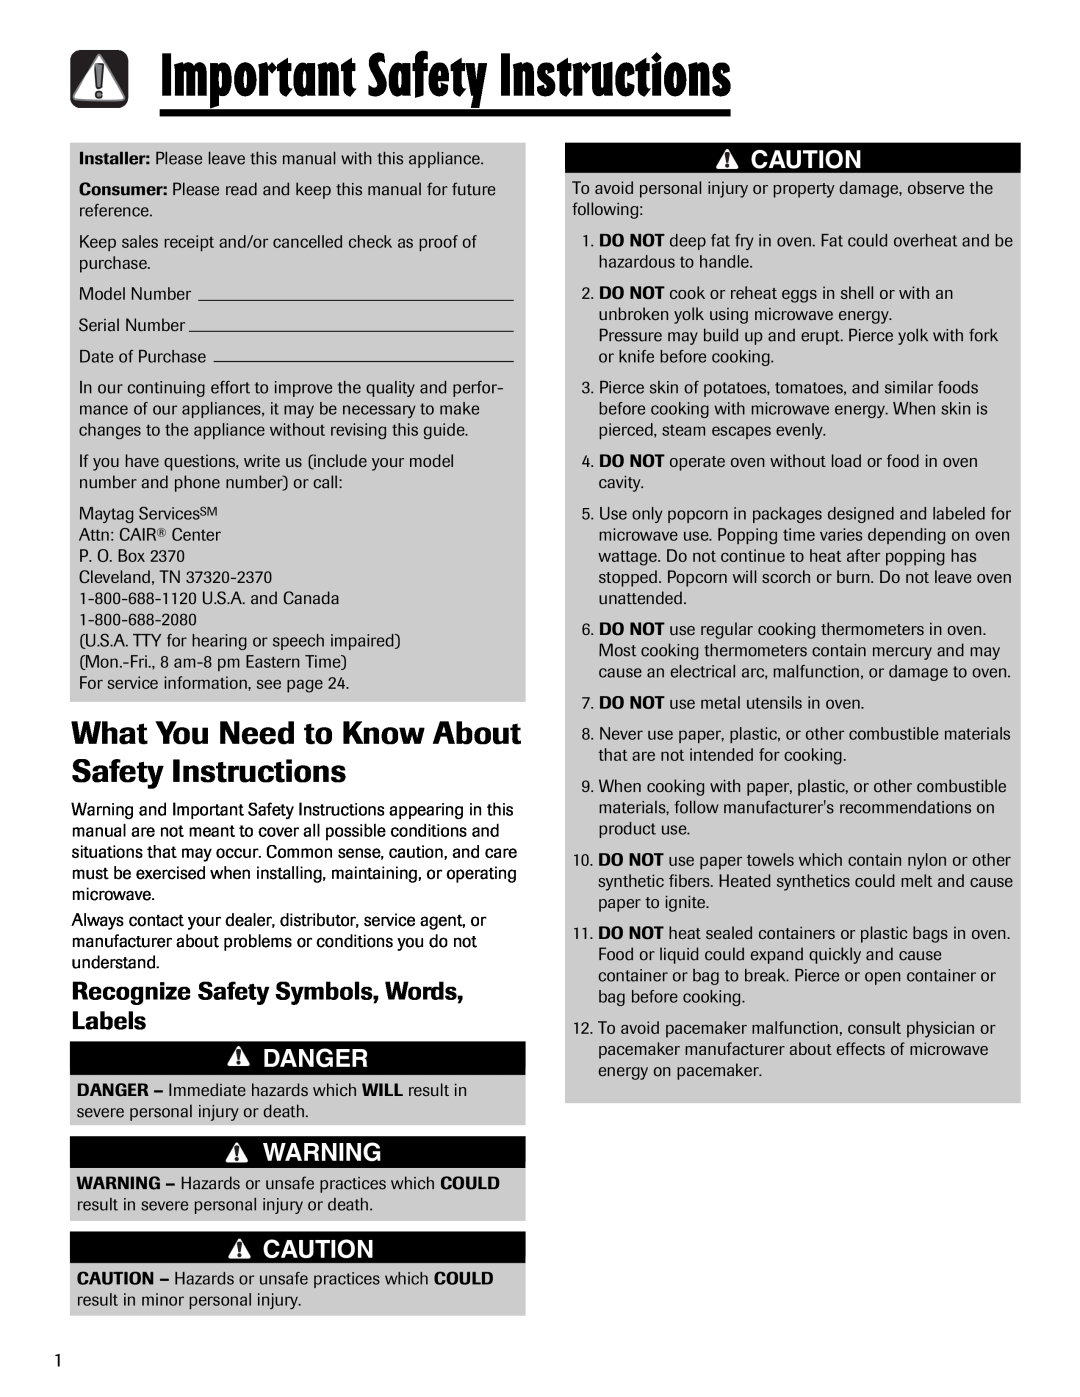 Maytag UMV1152BA Important Safety Instructions, What You Need to Know About Safety Instructions, Danger 